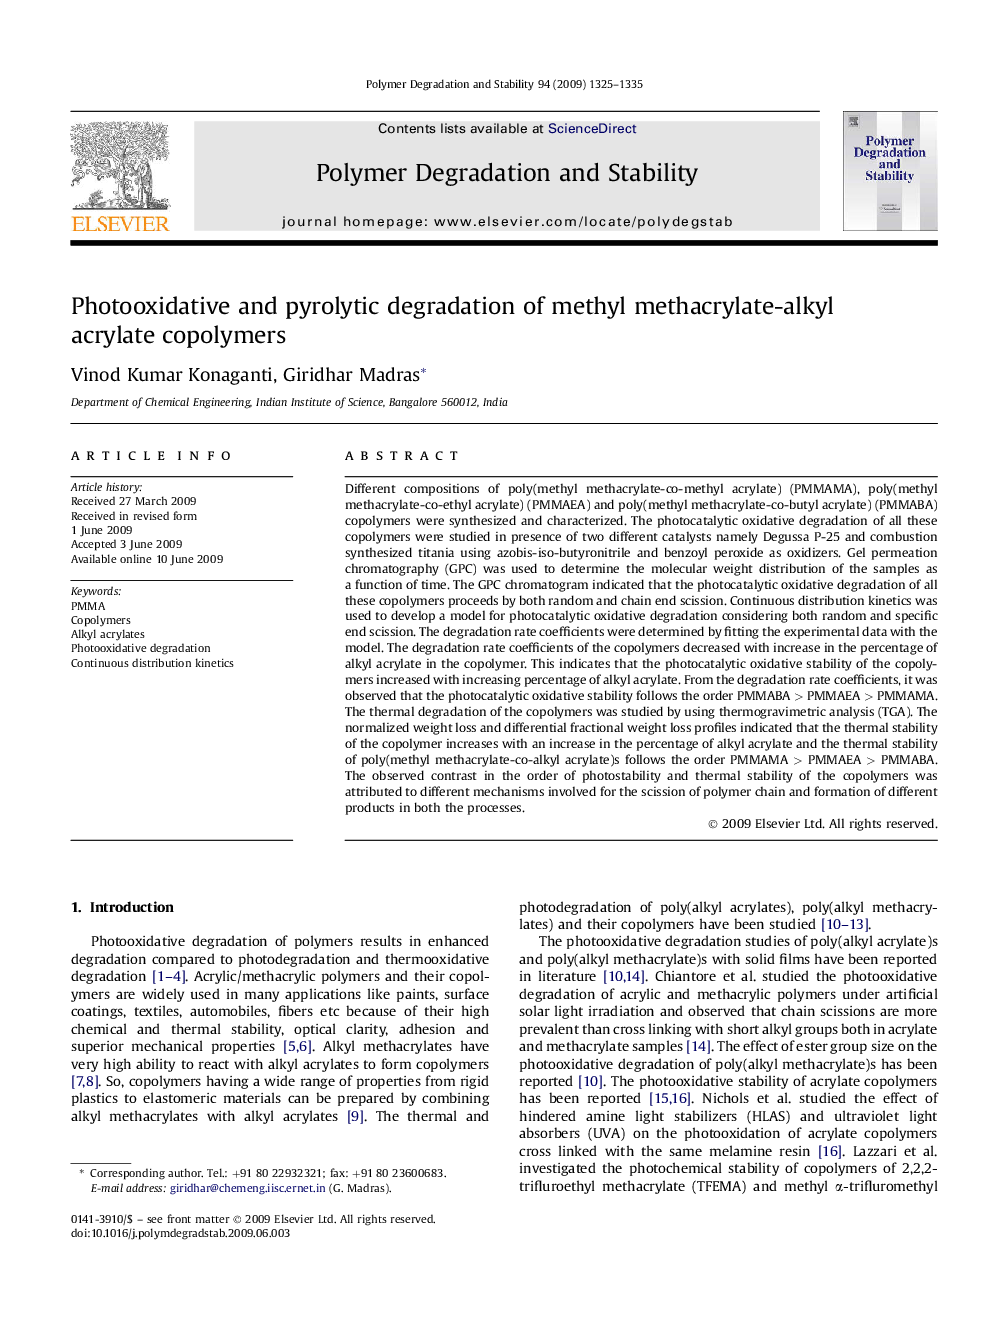 Photooxidative and pyrolytic degradation of methyl methacrylate-alkyl acrylate copolymers